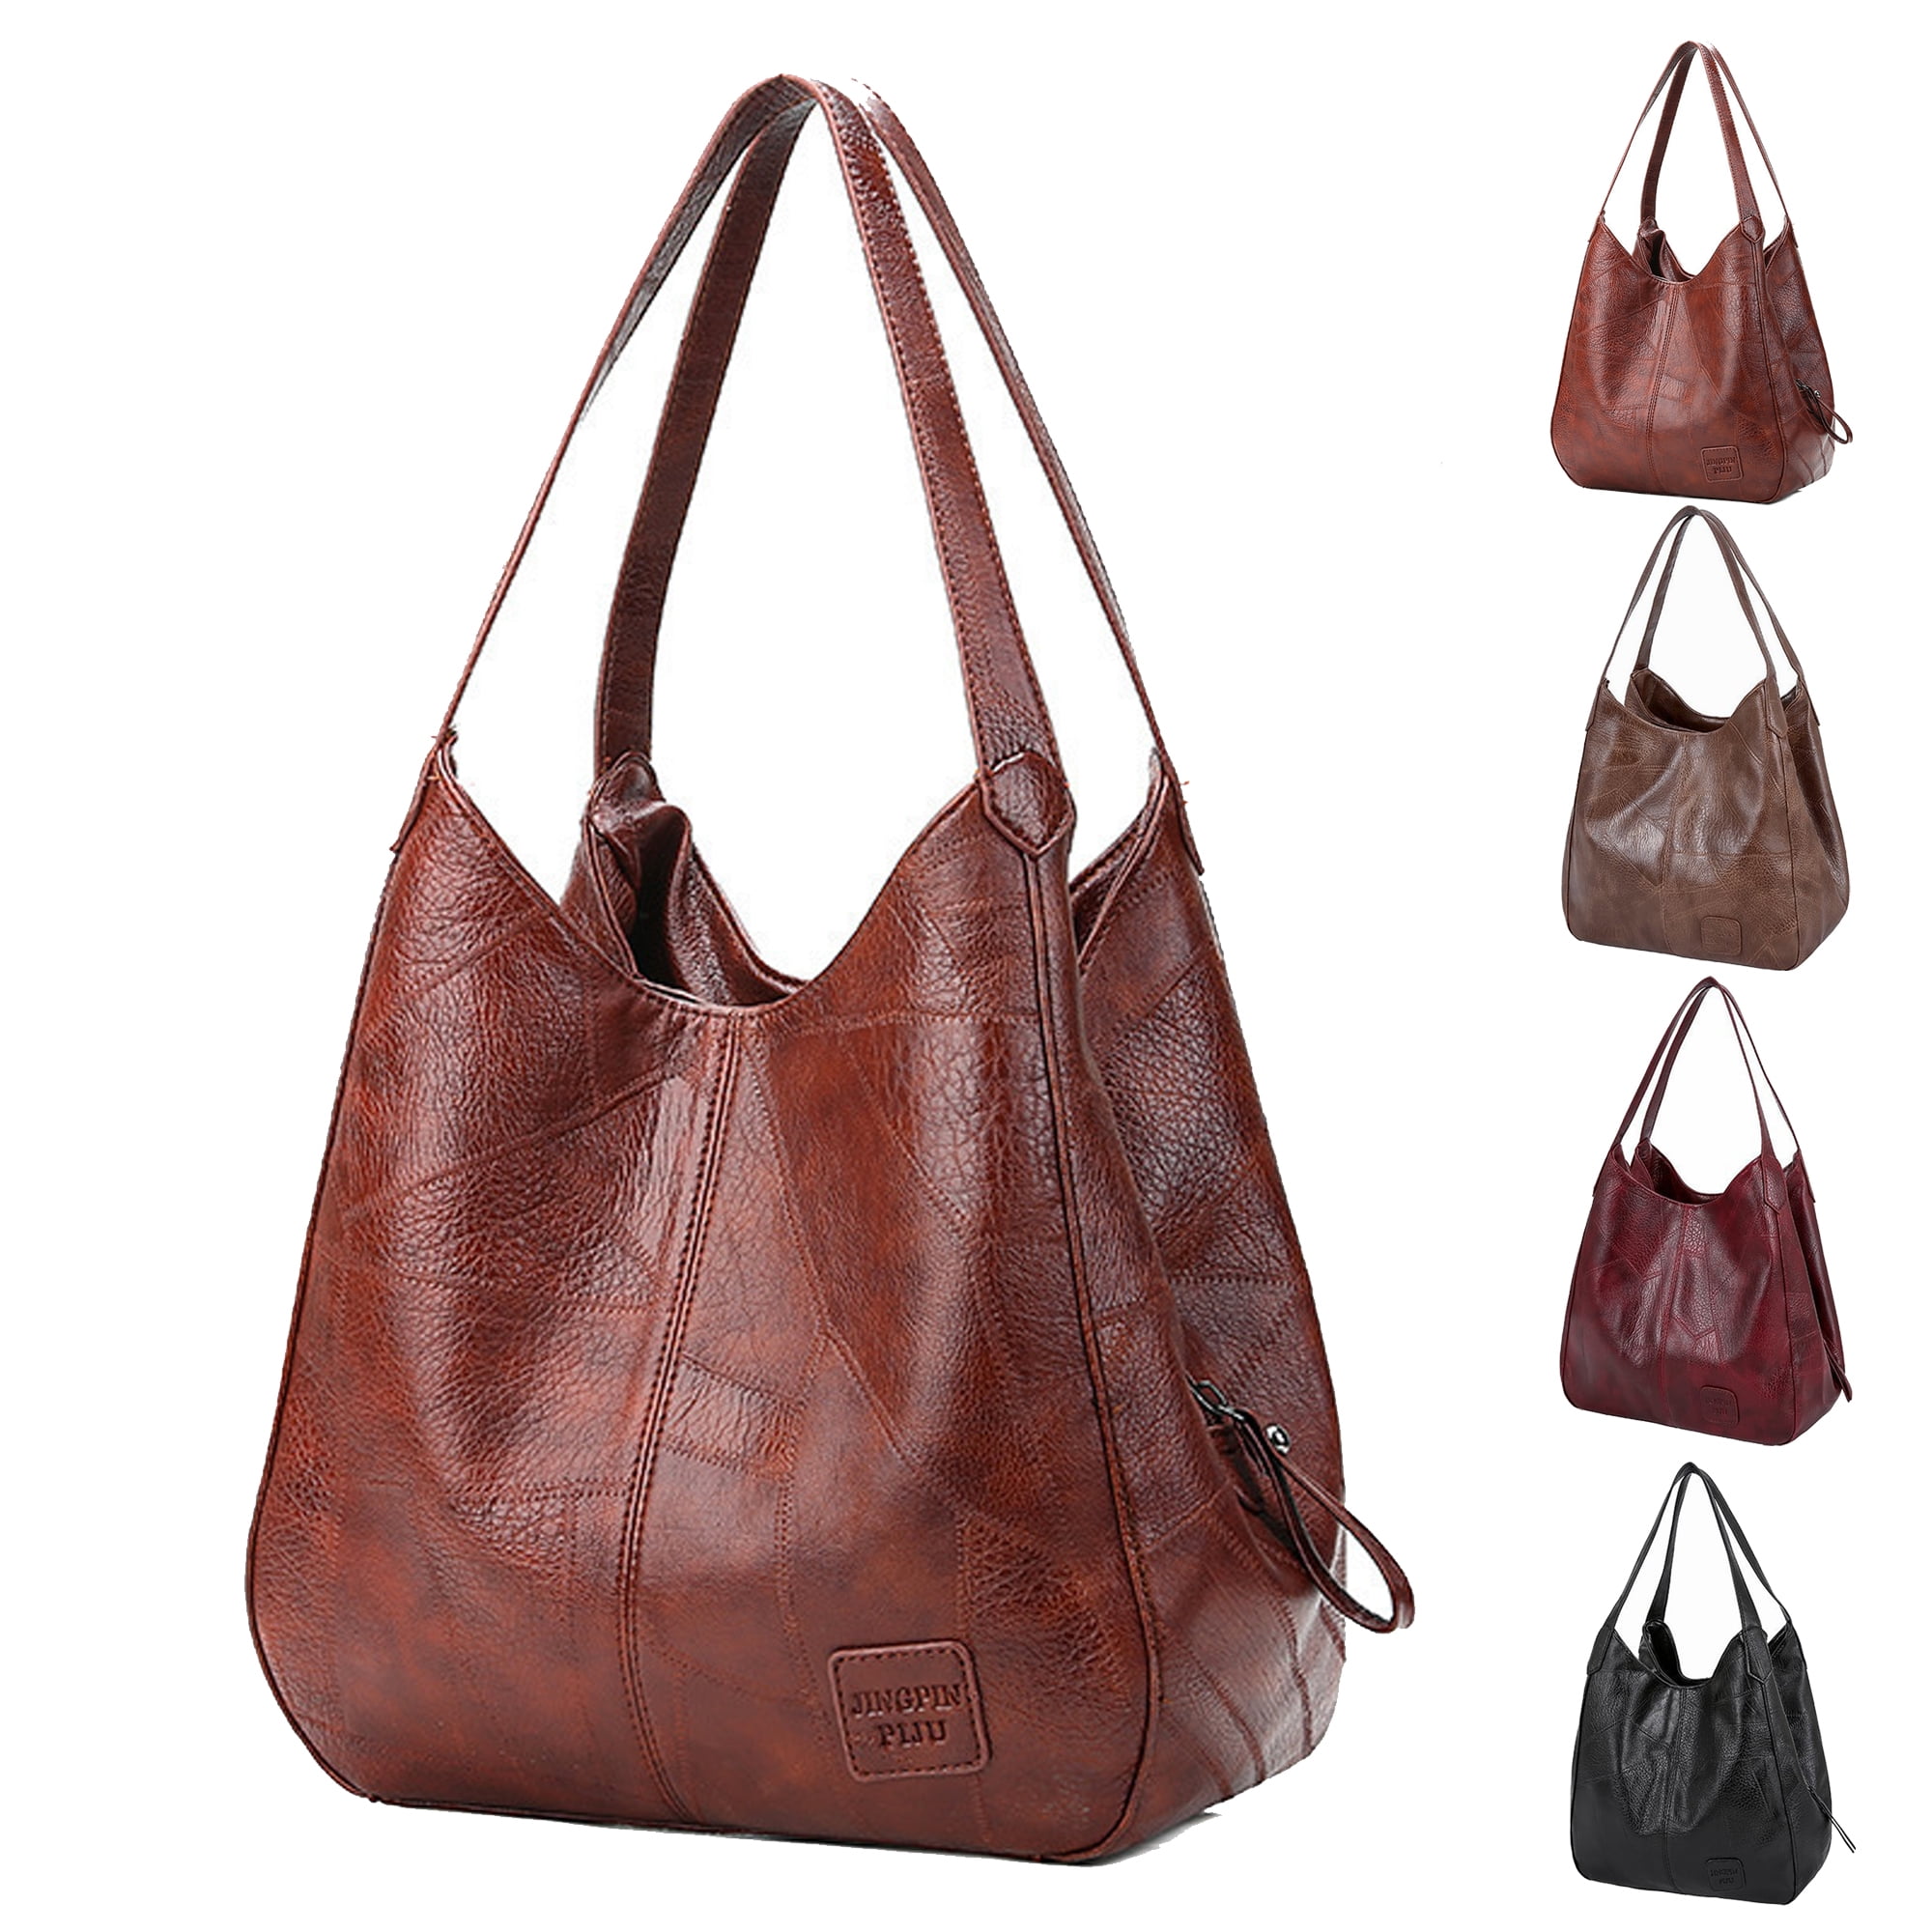 LOVEVOOK Large Purses for Women, Vintage Handbags for Women, PU Leather  Work Tote Bags, Shoulder Bag with Multi-Pockets, Satchel Hobo Bag, Beige:  Handbags